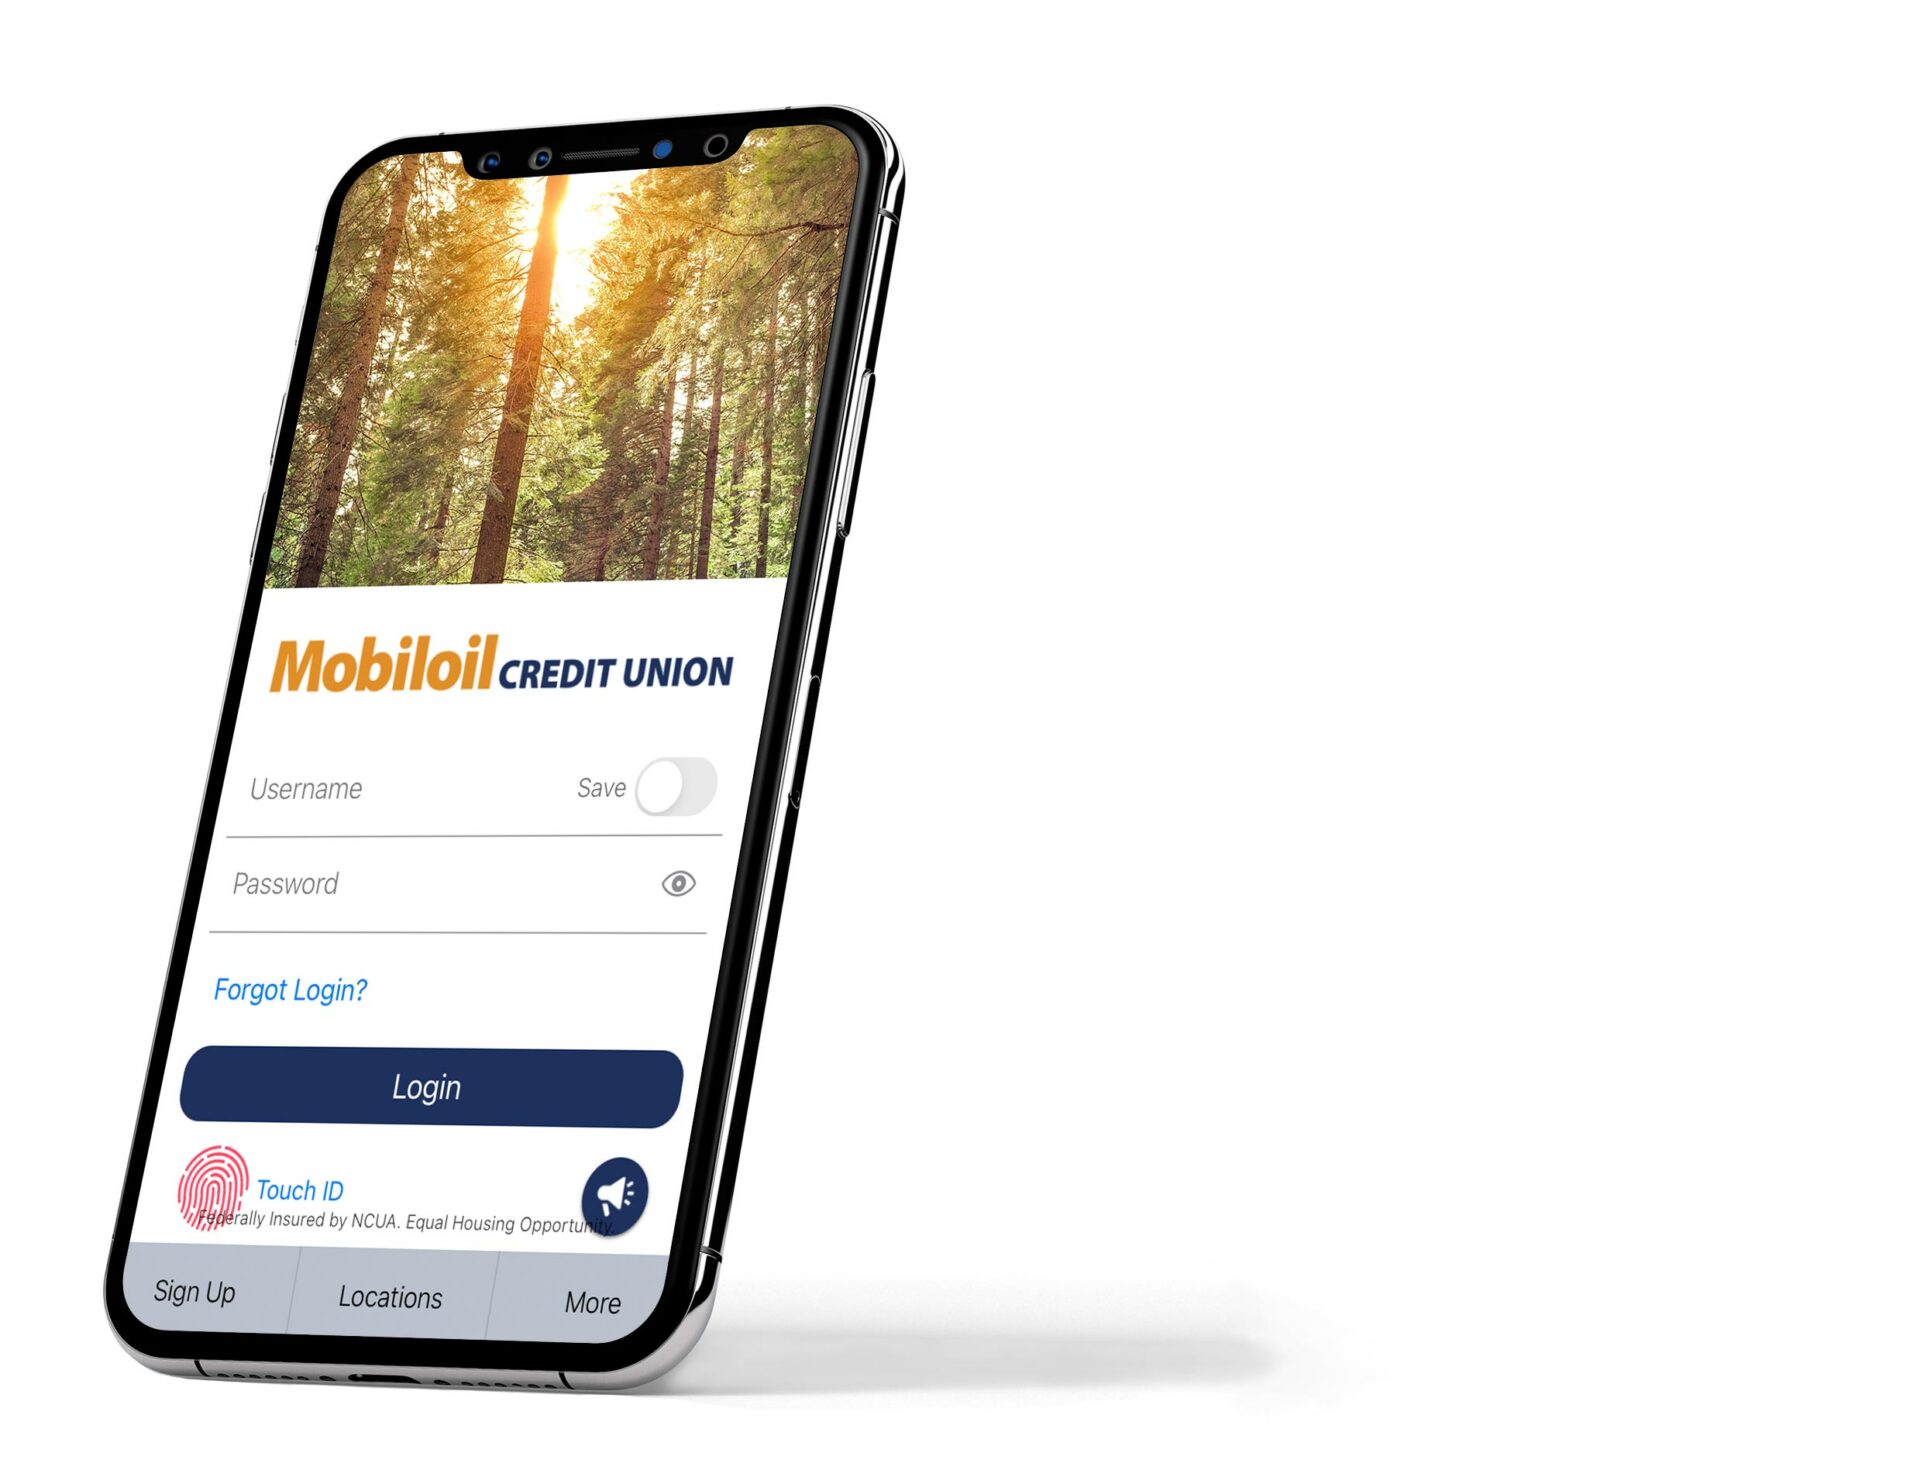 Mobiloil CU mobile app login screen example